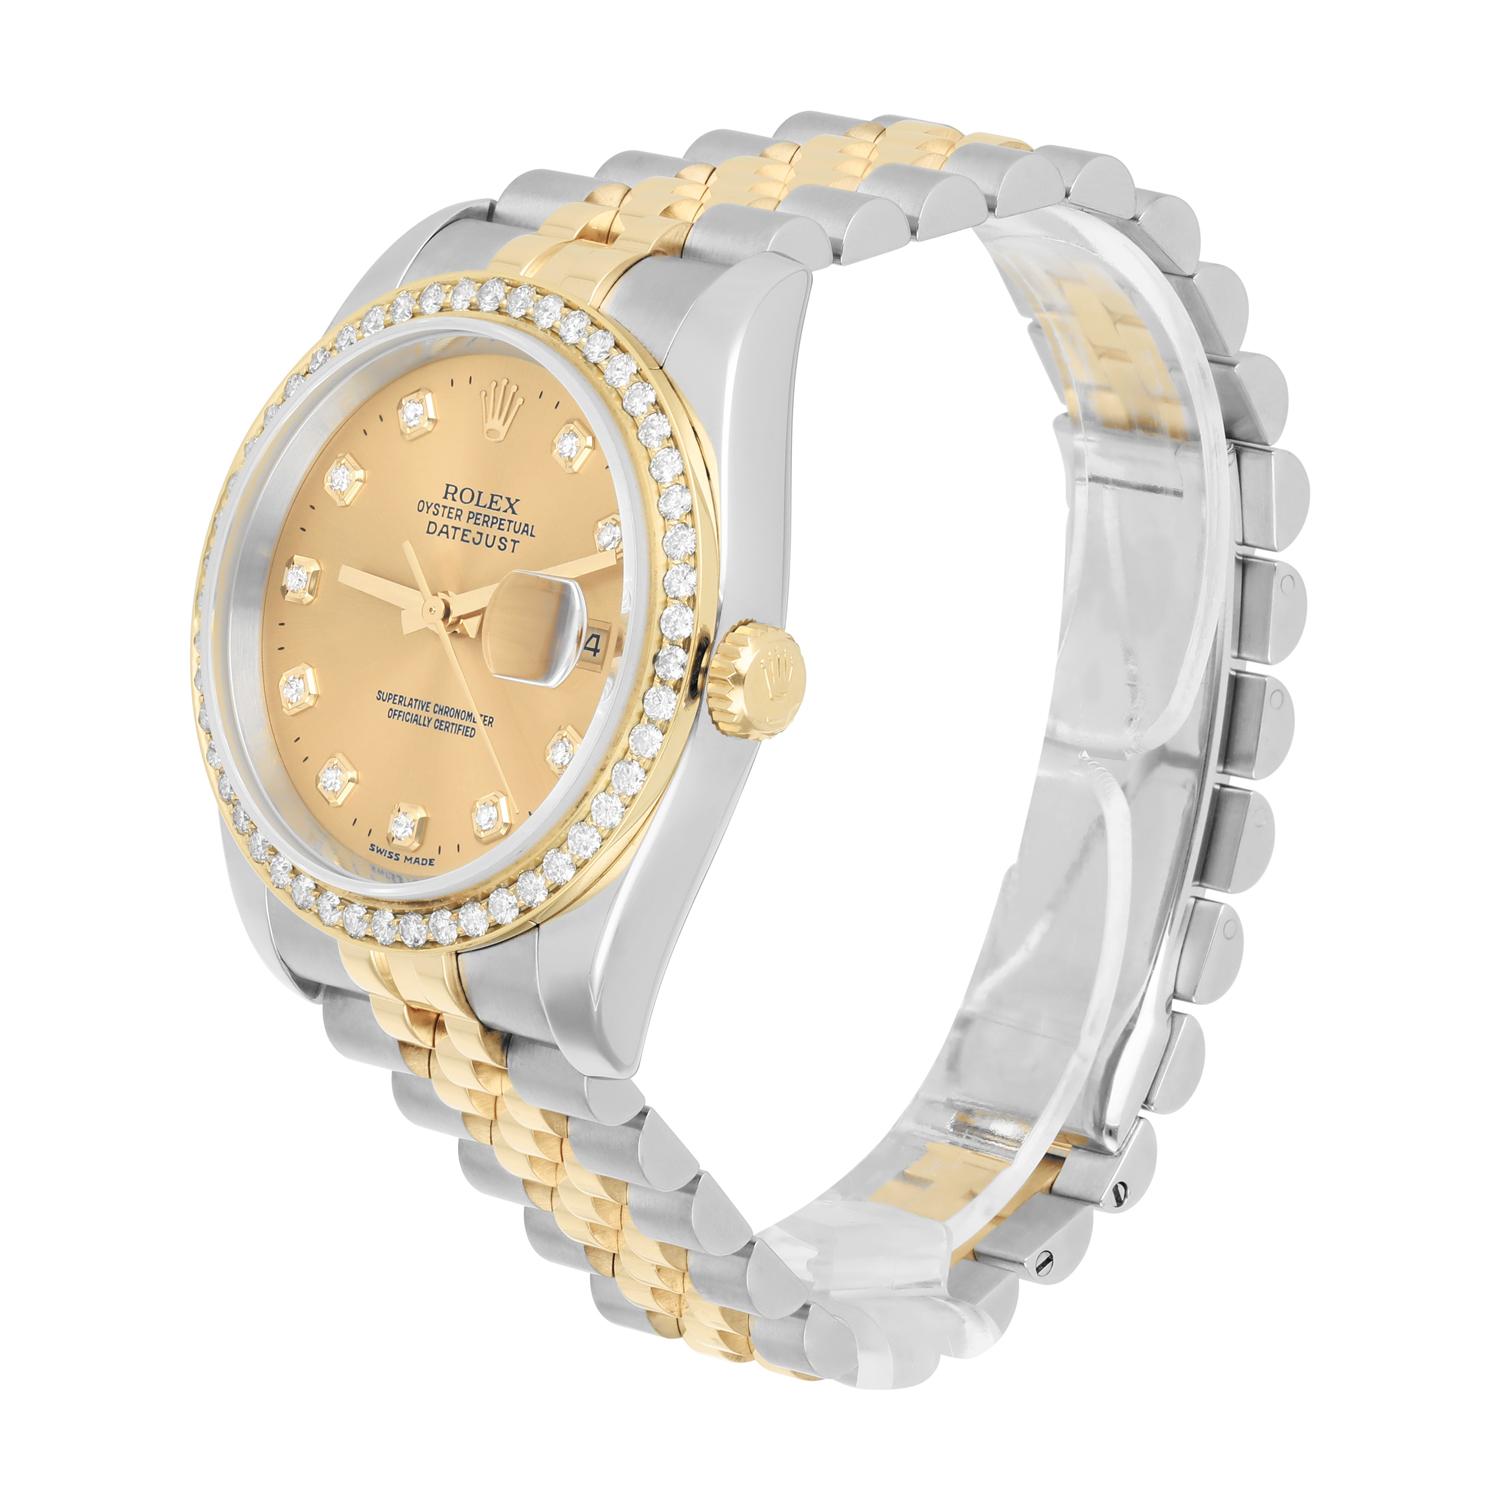 Femenino o masculino Reloj Rolex Datejust 36 Oro y Acero 116233 Reloj Jubilee Esfera Champán en venta